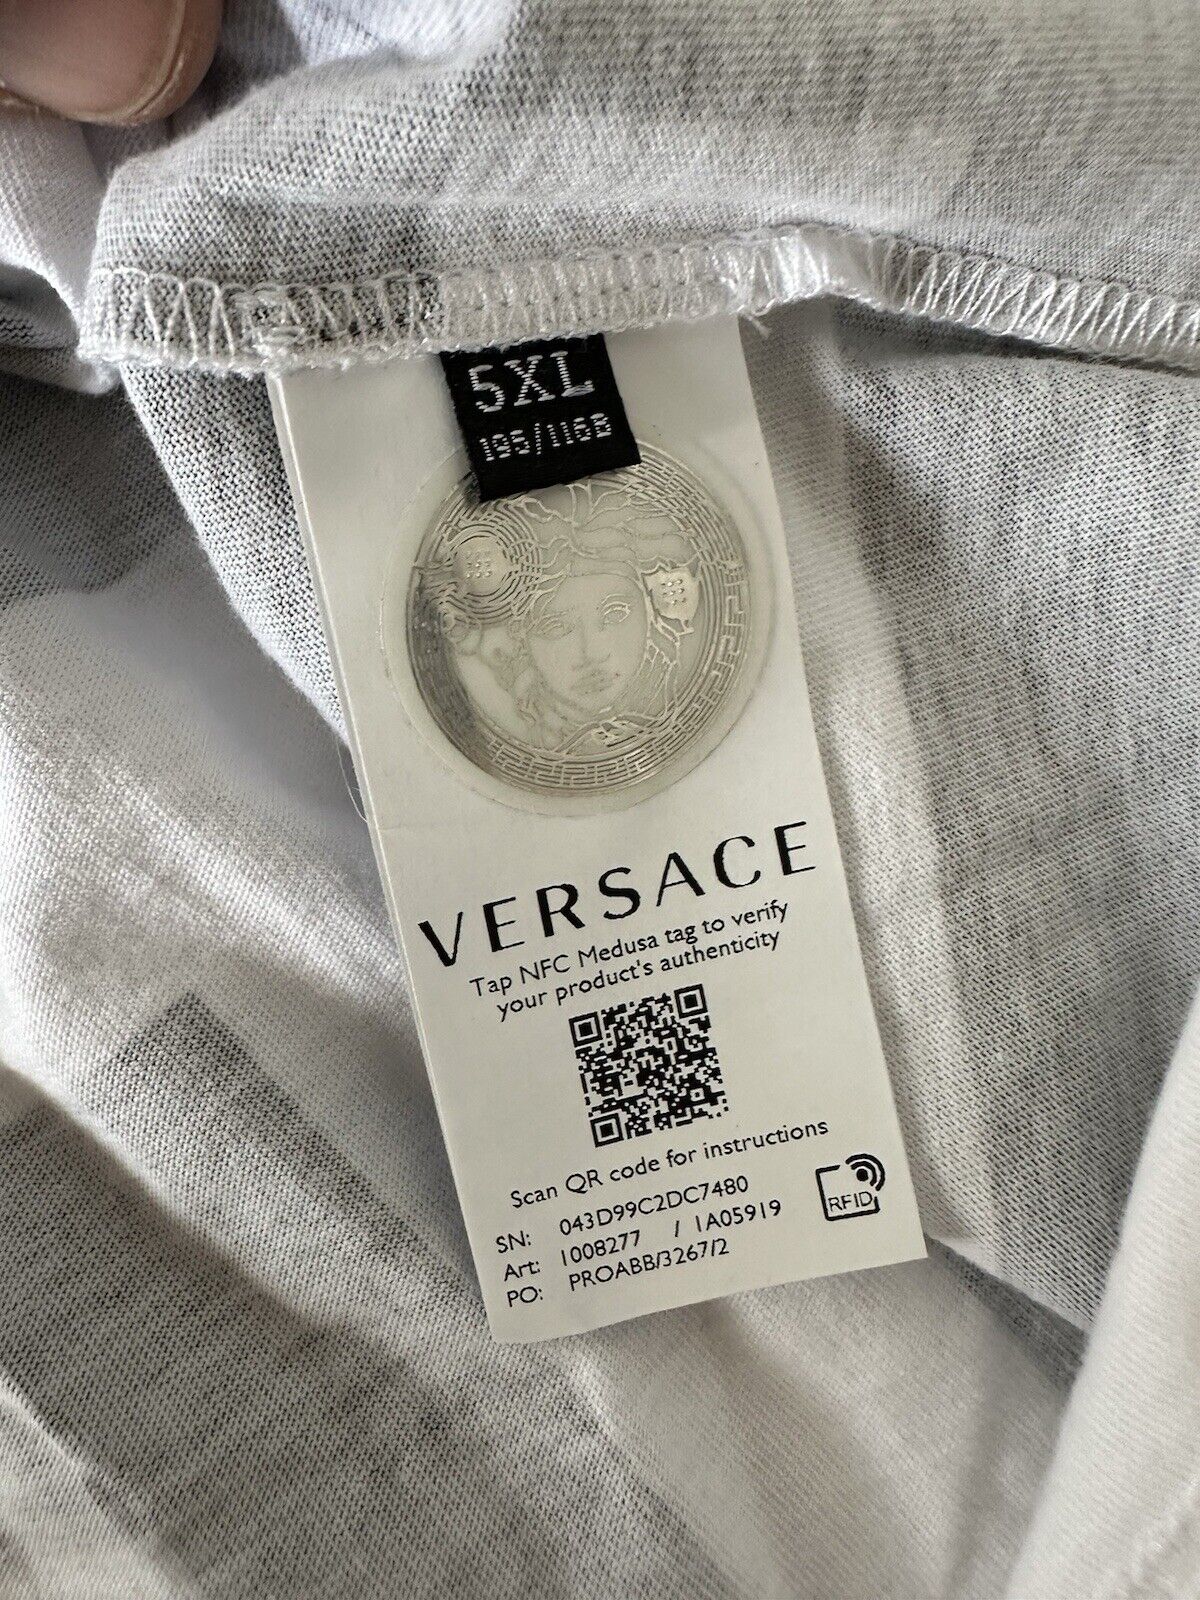 Versace Greek Key and Versace Logo White T-Shirt 5XL 1A05919 Italy NWT $500